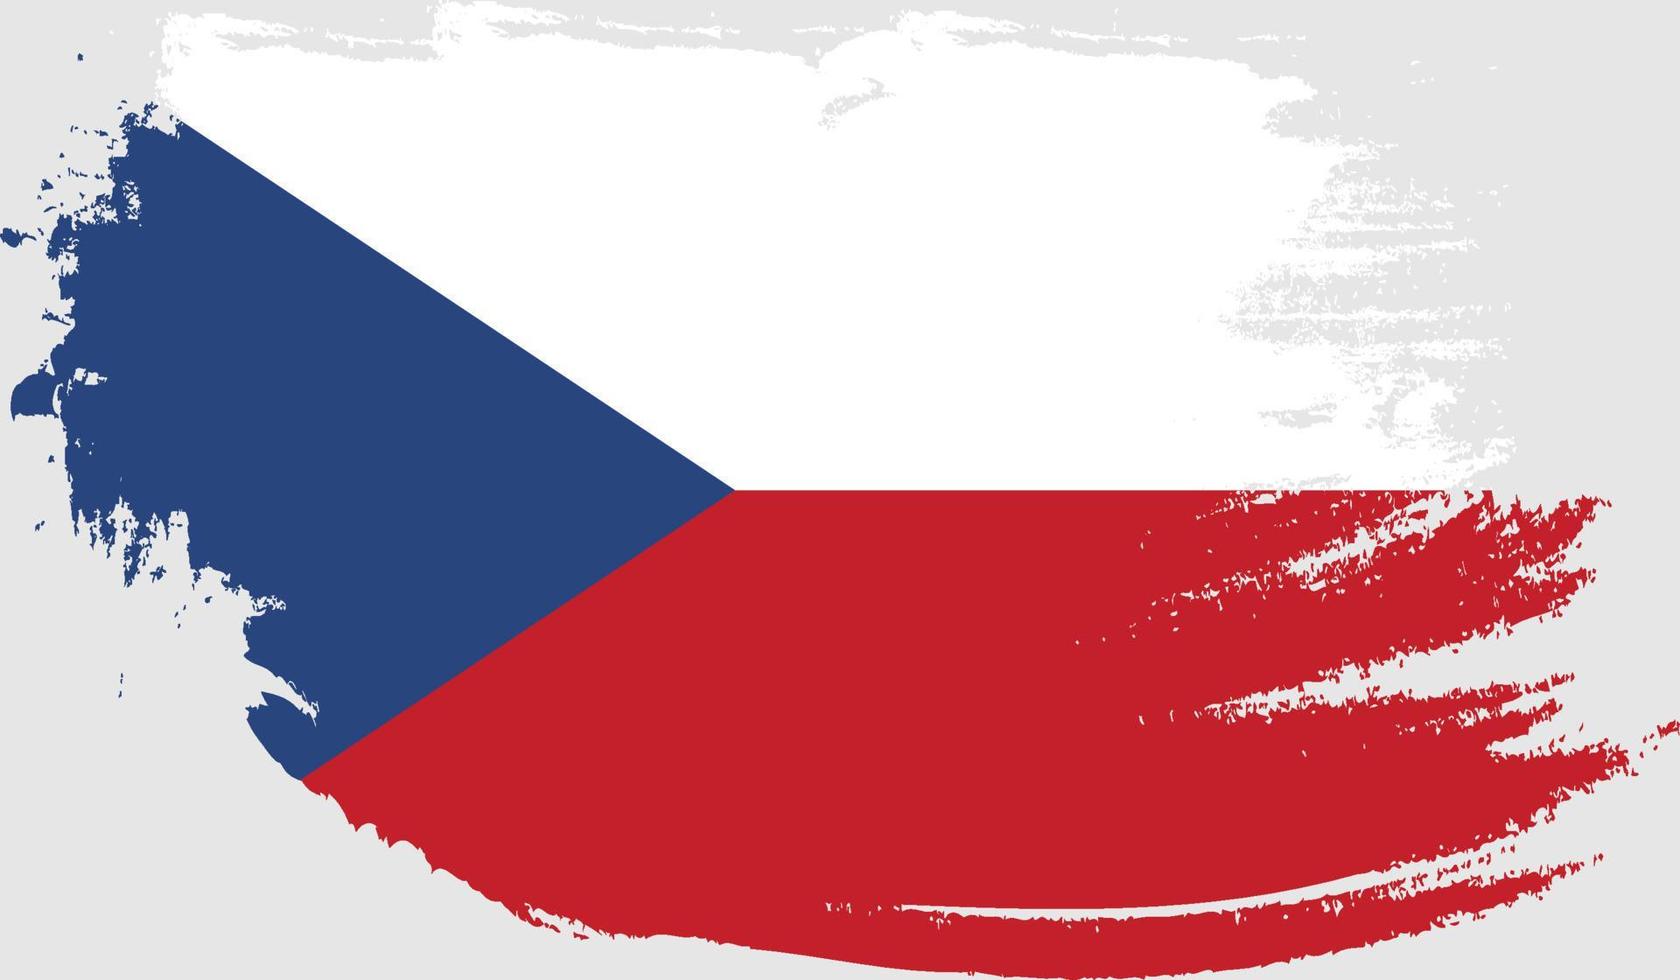 Czech Republic flag with grunge texture vector